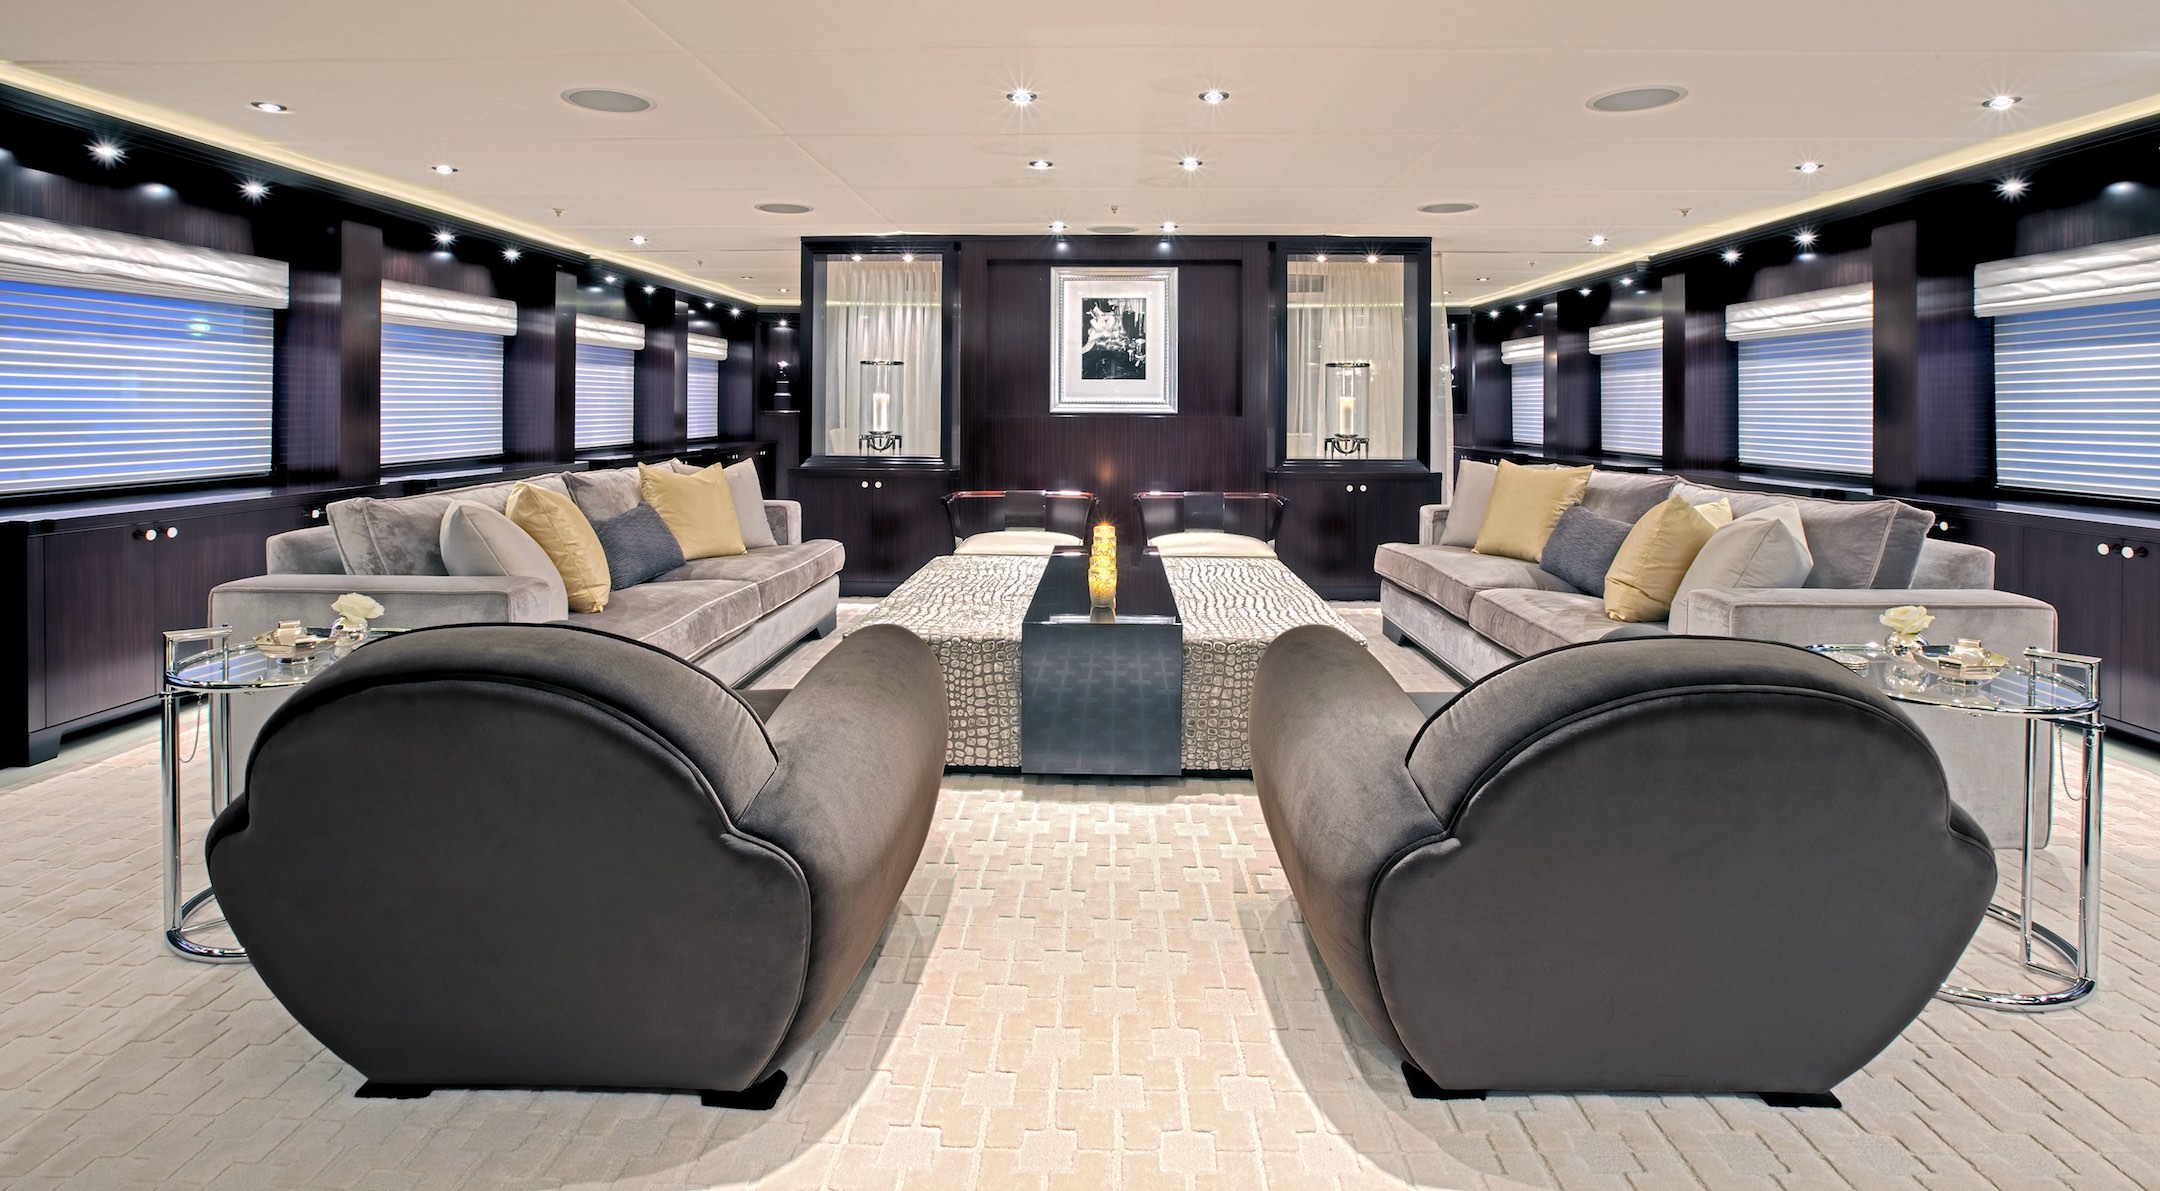 Carpe Diem Luxury Yacht lounge